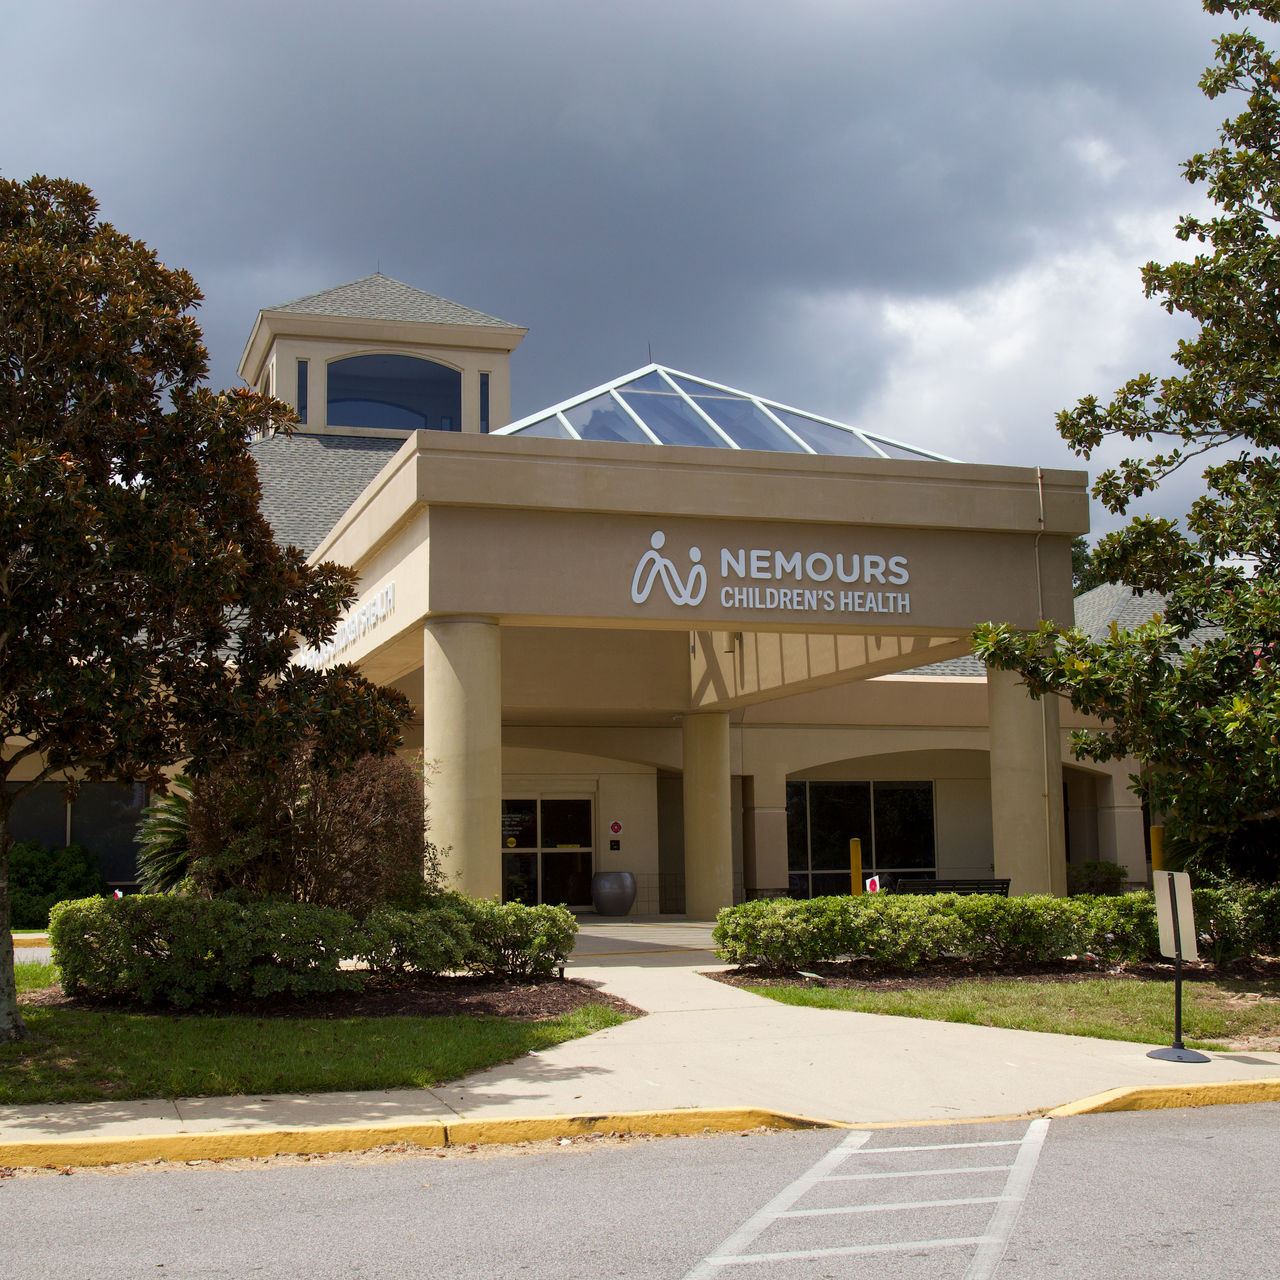 Exterior of Nemours Children's Health, Pensacola